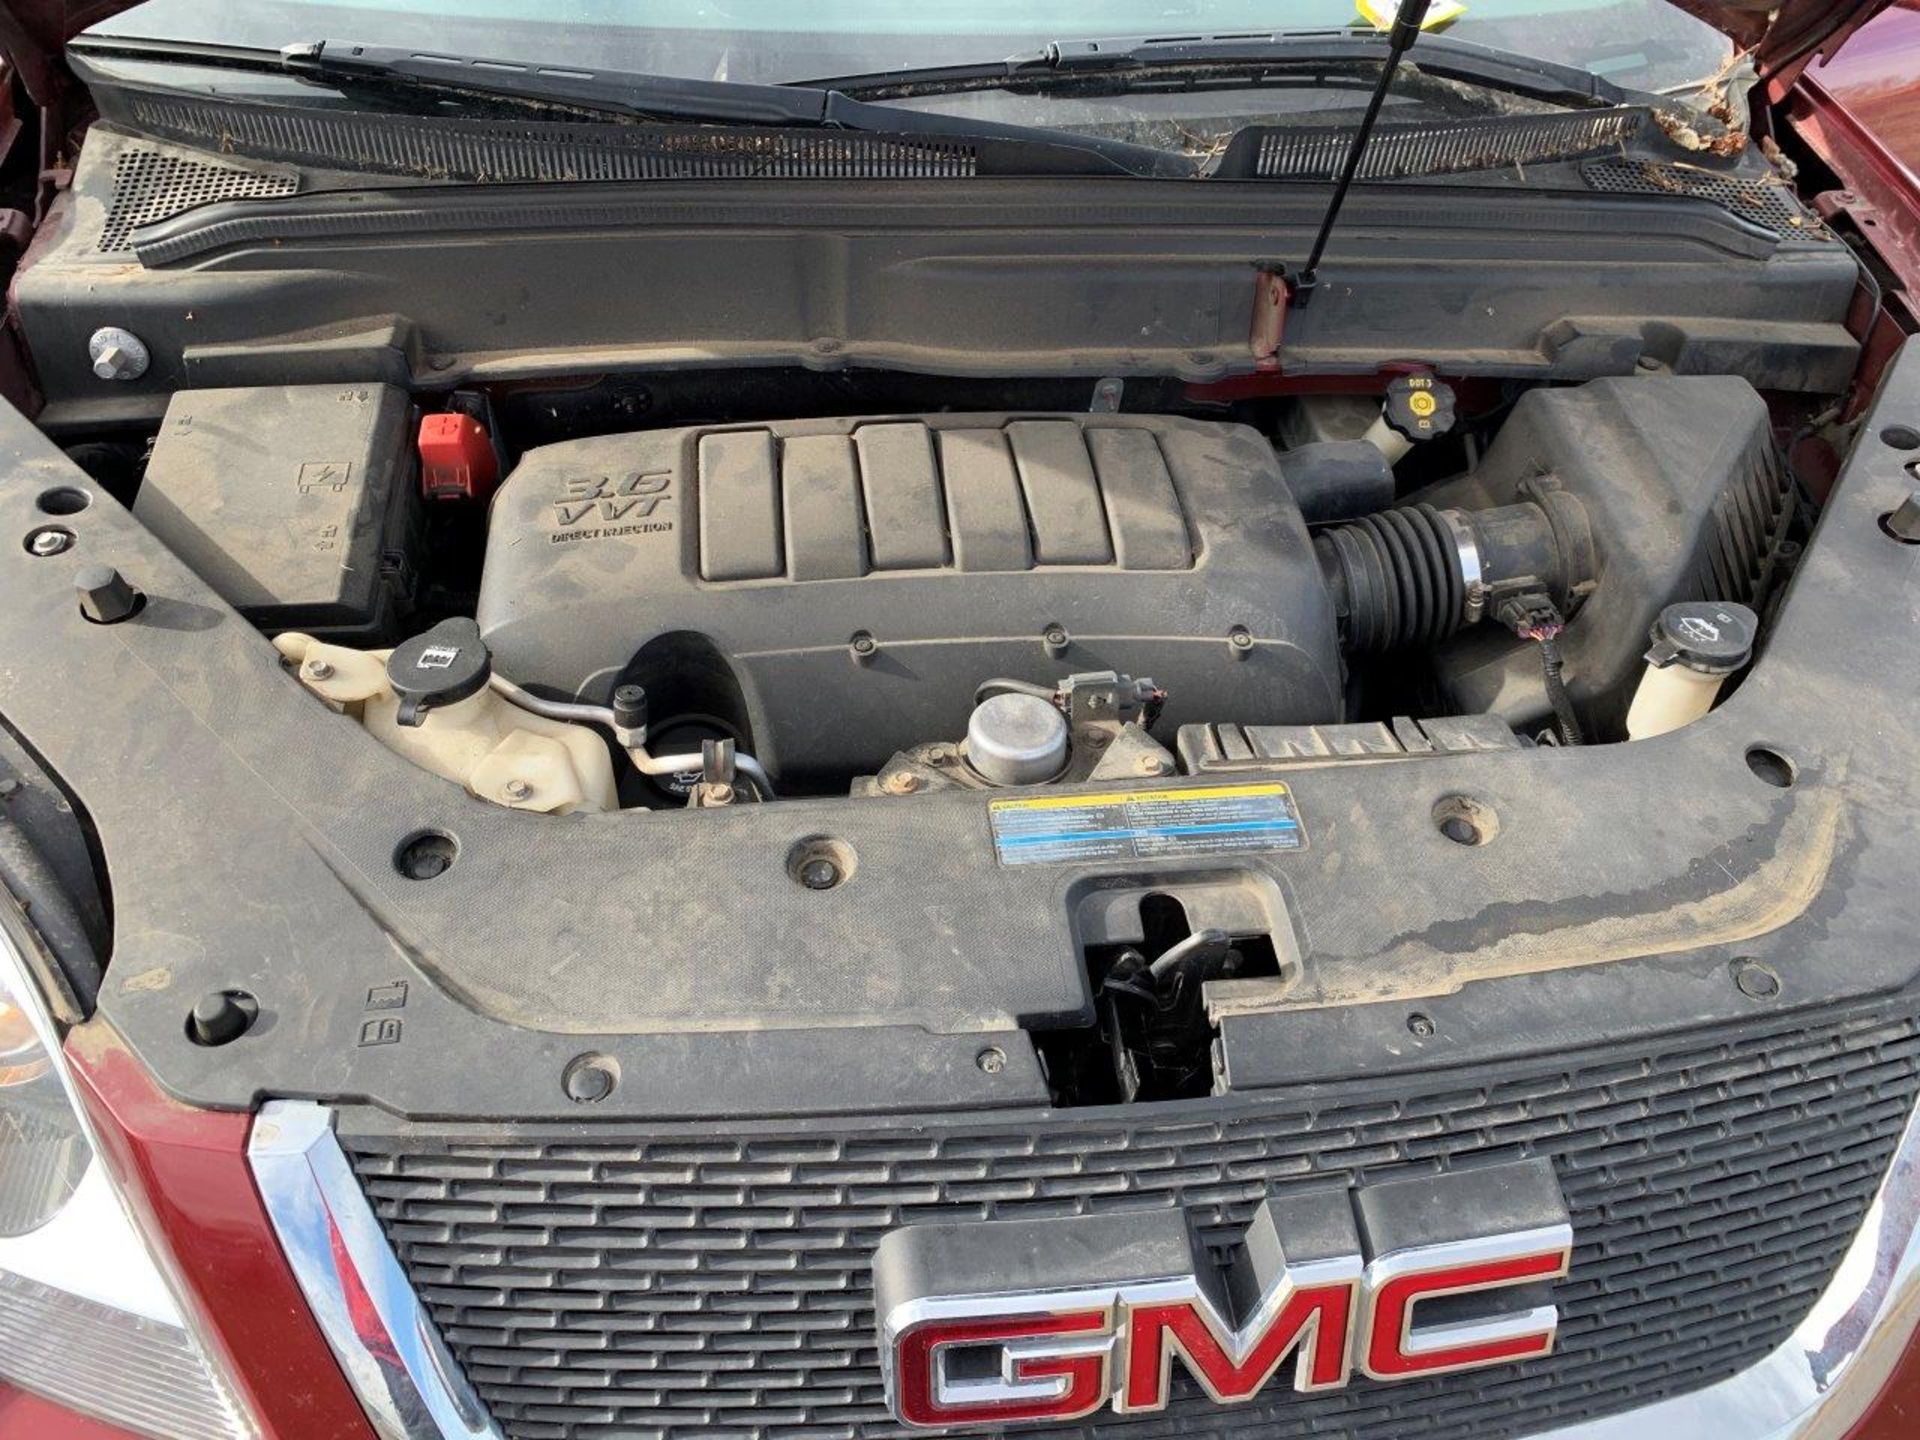 2010 GMC ACADIA SLT SUV, 3.6L VVT ENG., AT, 4-DOOR, 7-PASSENGER, DVD SYSTEM LEATHER, 233,607 KMS - Image 8 of 16